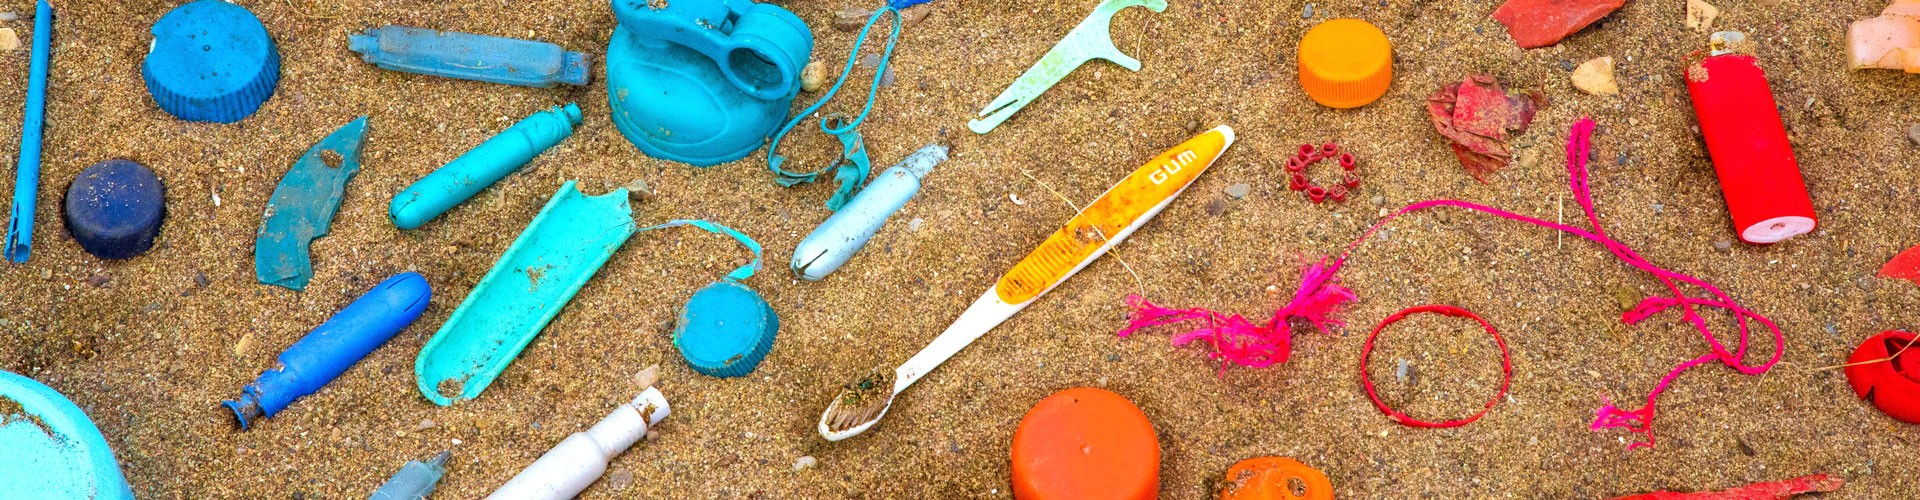 waste plastics arranged by colour on beach